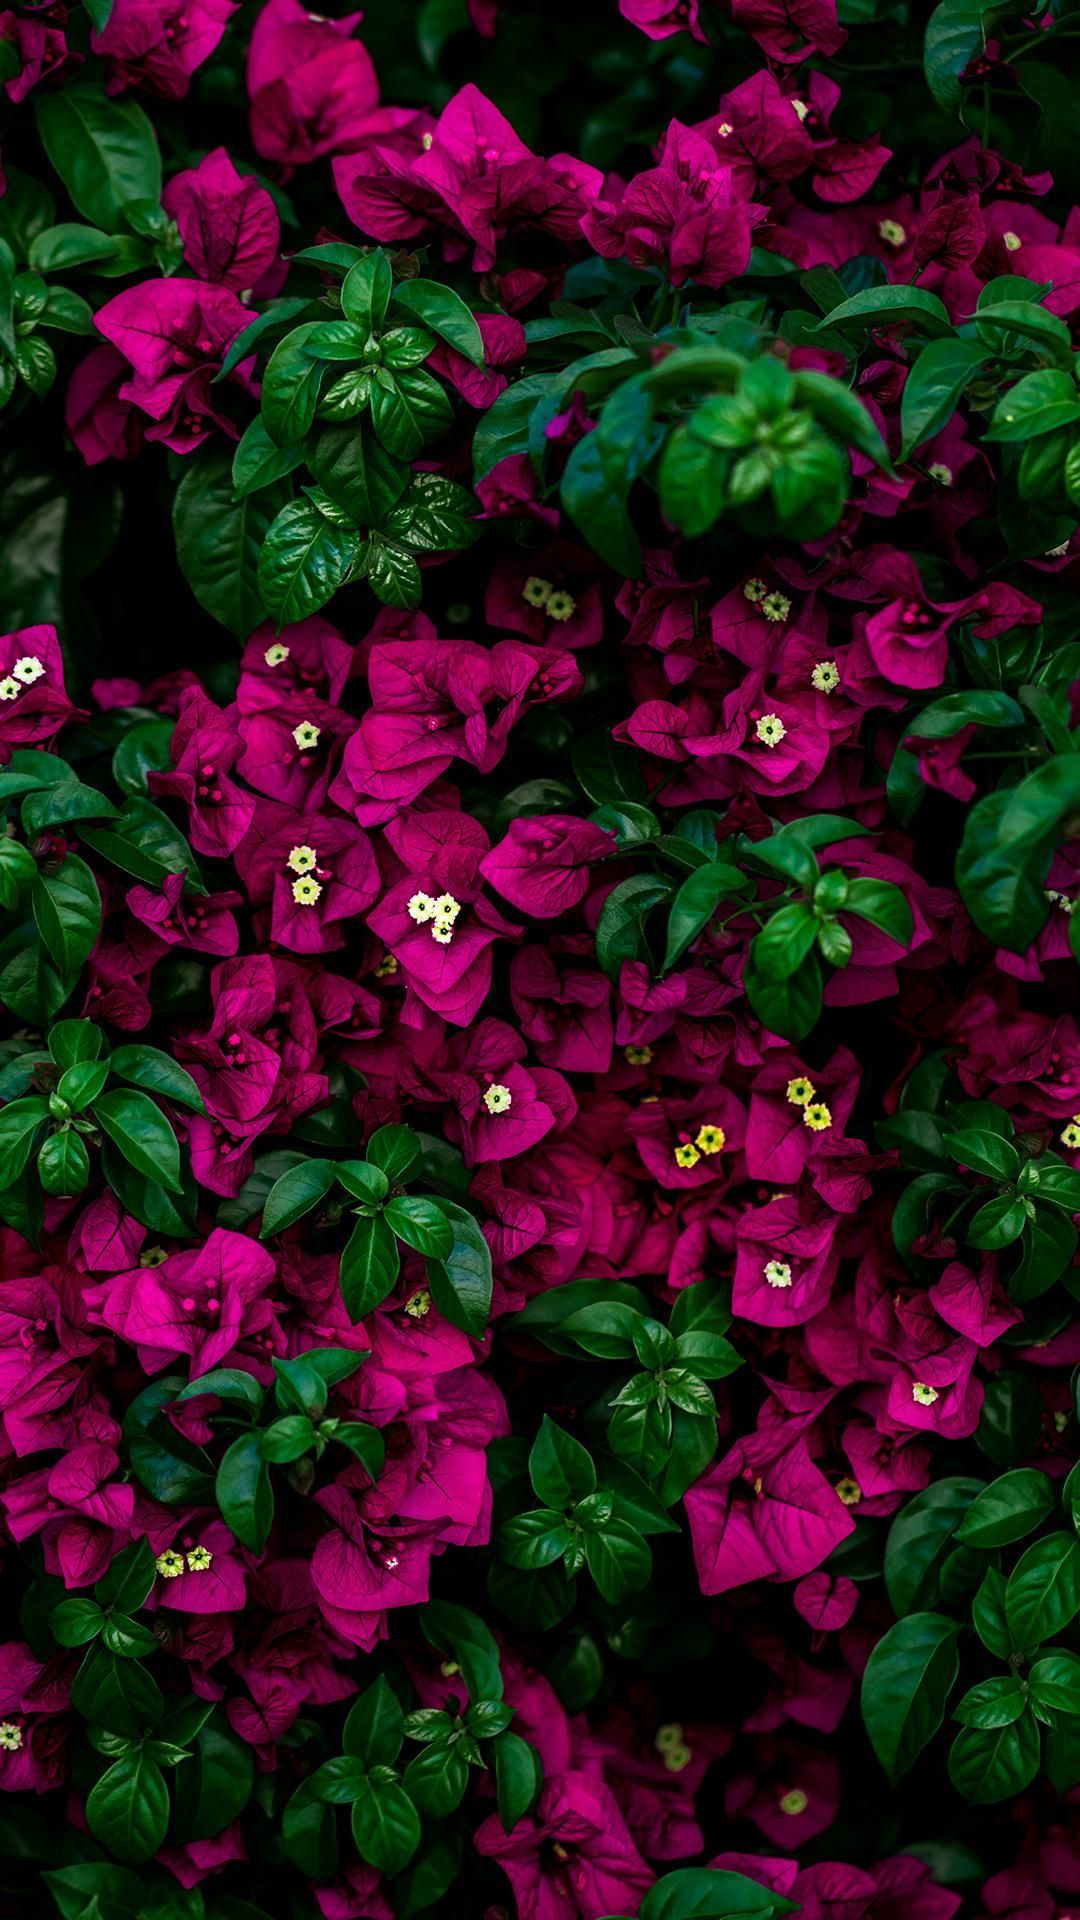 Amoled Wallpaper 38. Flower wallpaper, Nature iphone wallpaper, HD flowers